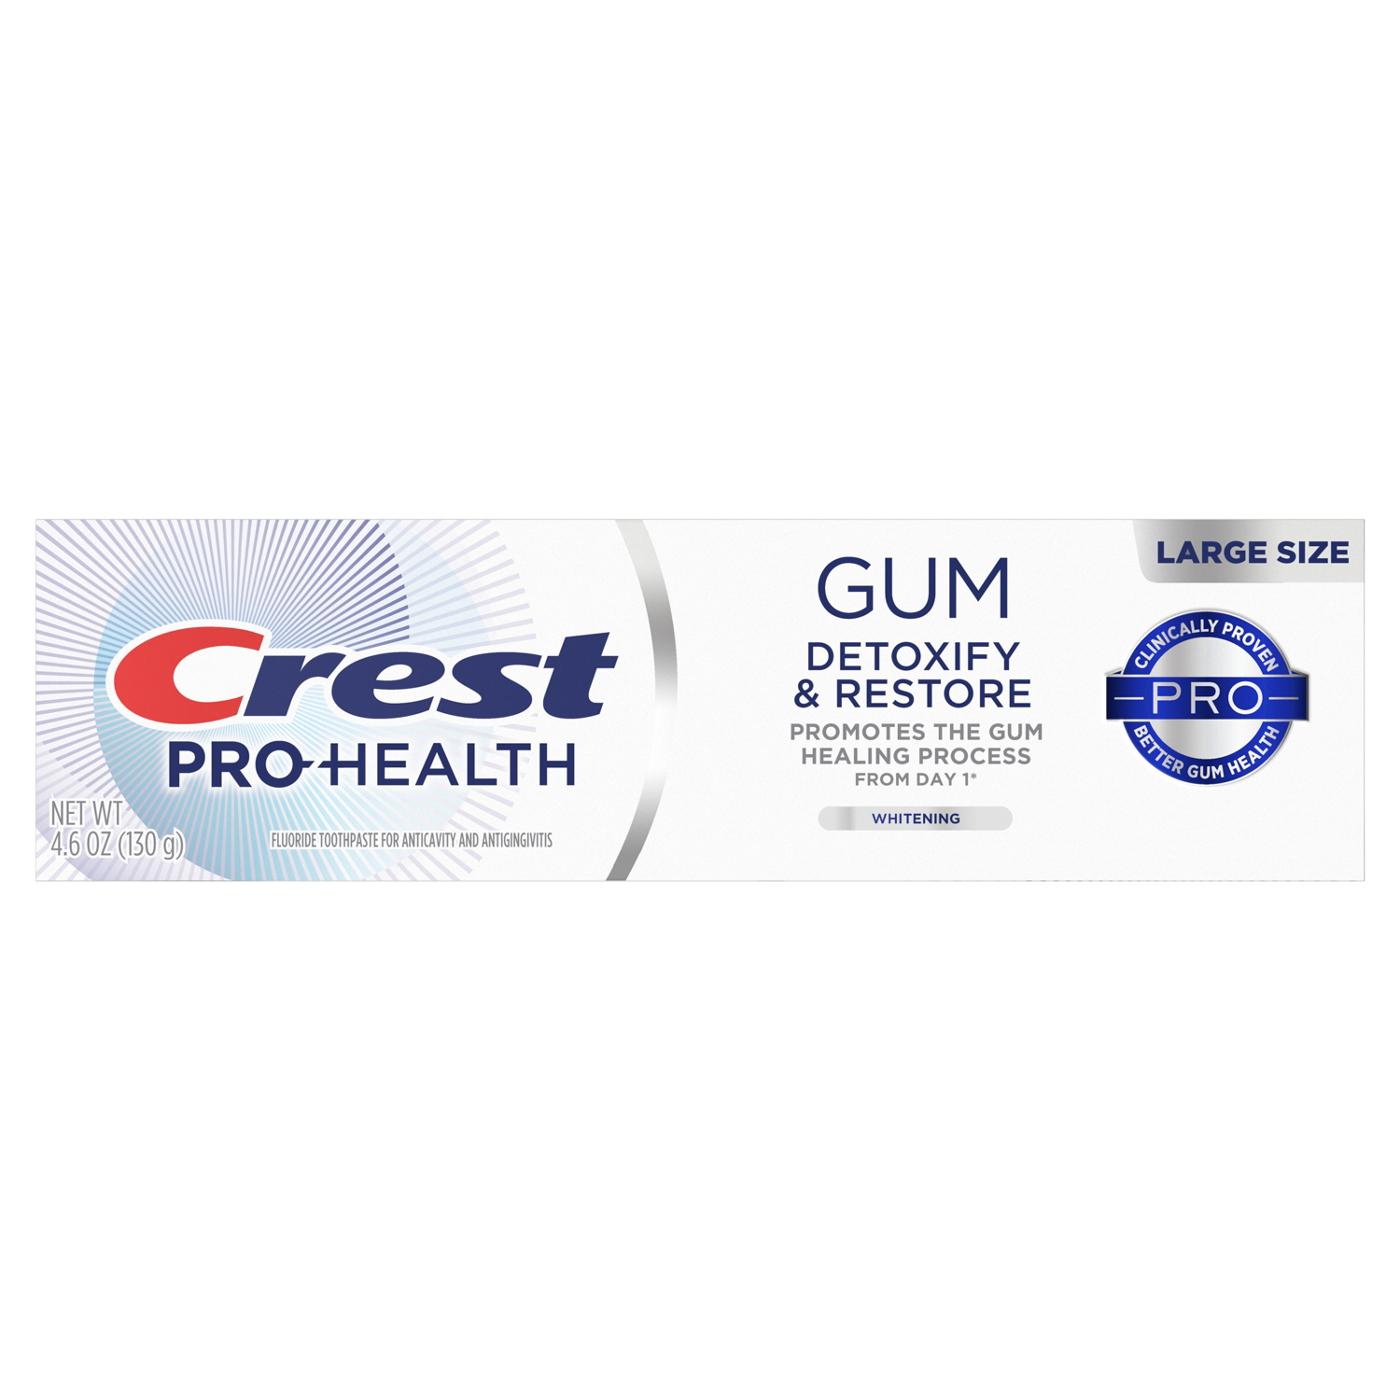 Crest Pro Health Gum Detoxify & Restore - Whitening; image 1 of 8